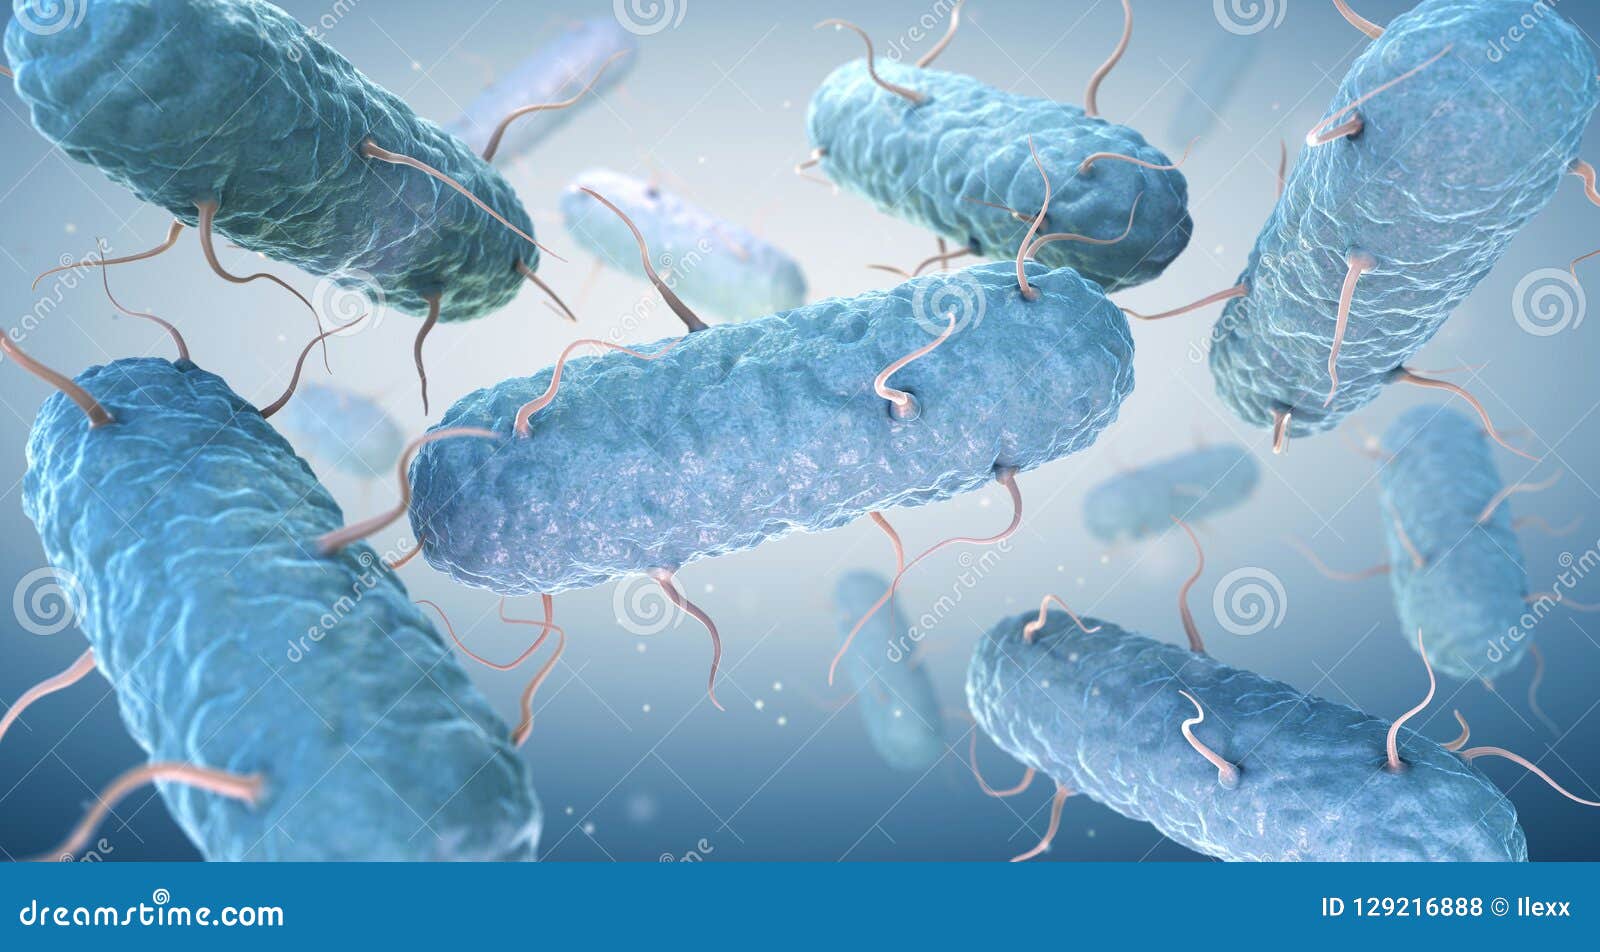 enterobacteria. enterobacteriaceae are a large family of gram-negative bacteria